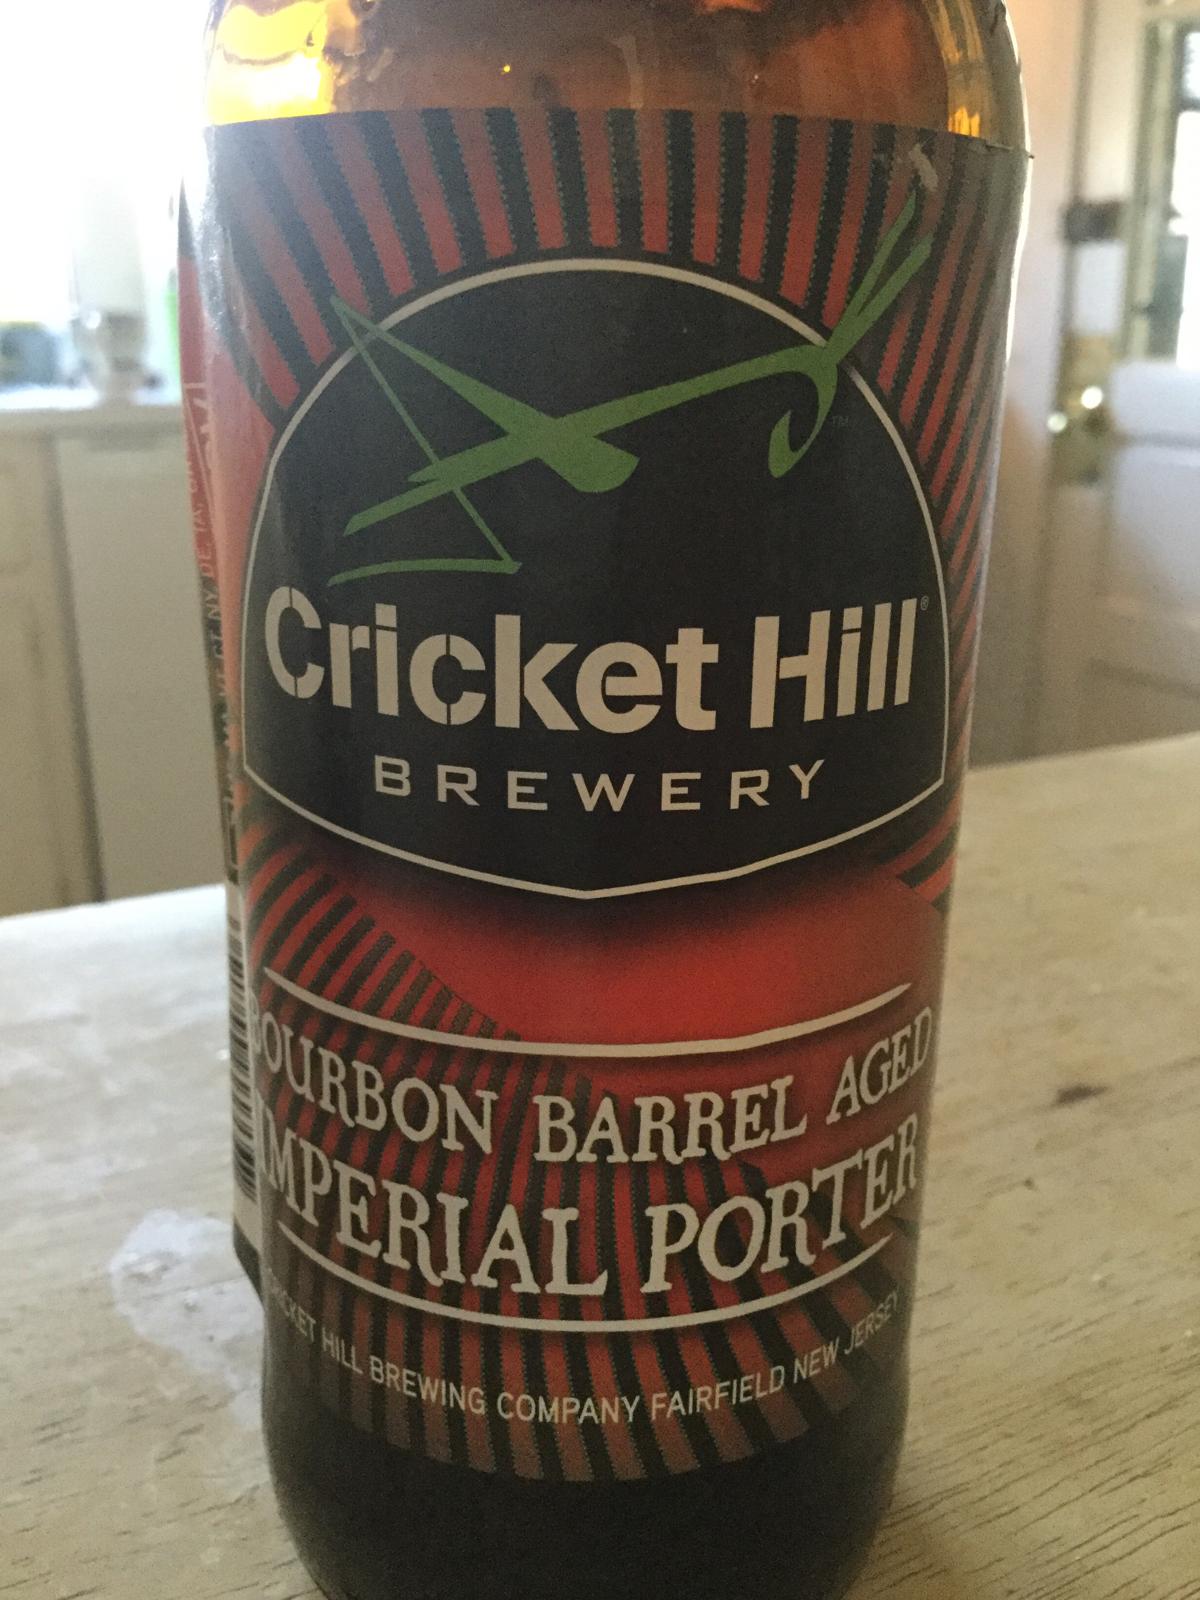 Imperial Porter (Bourbon Barrel Aged)